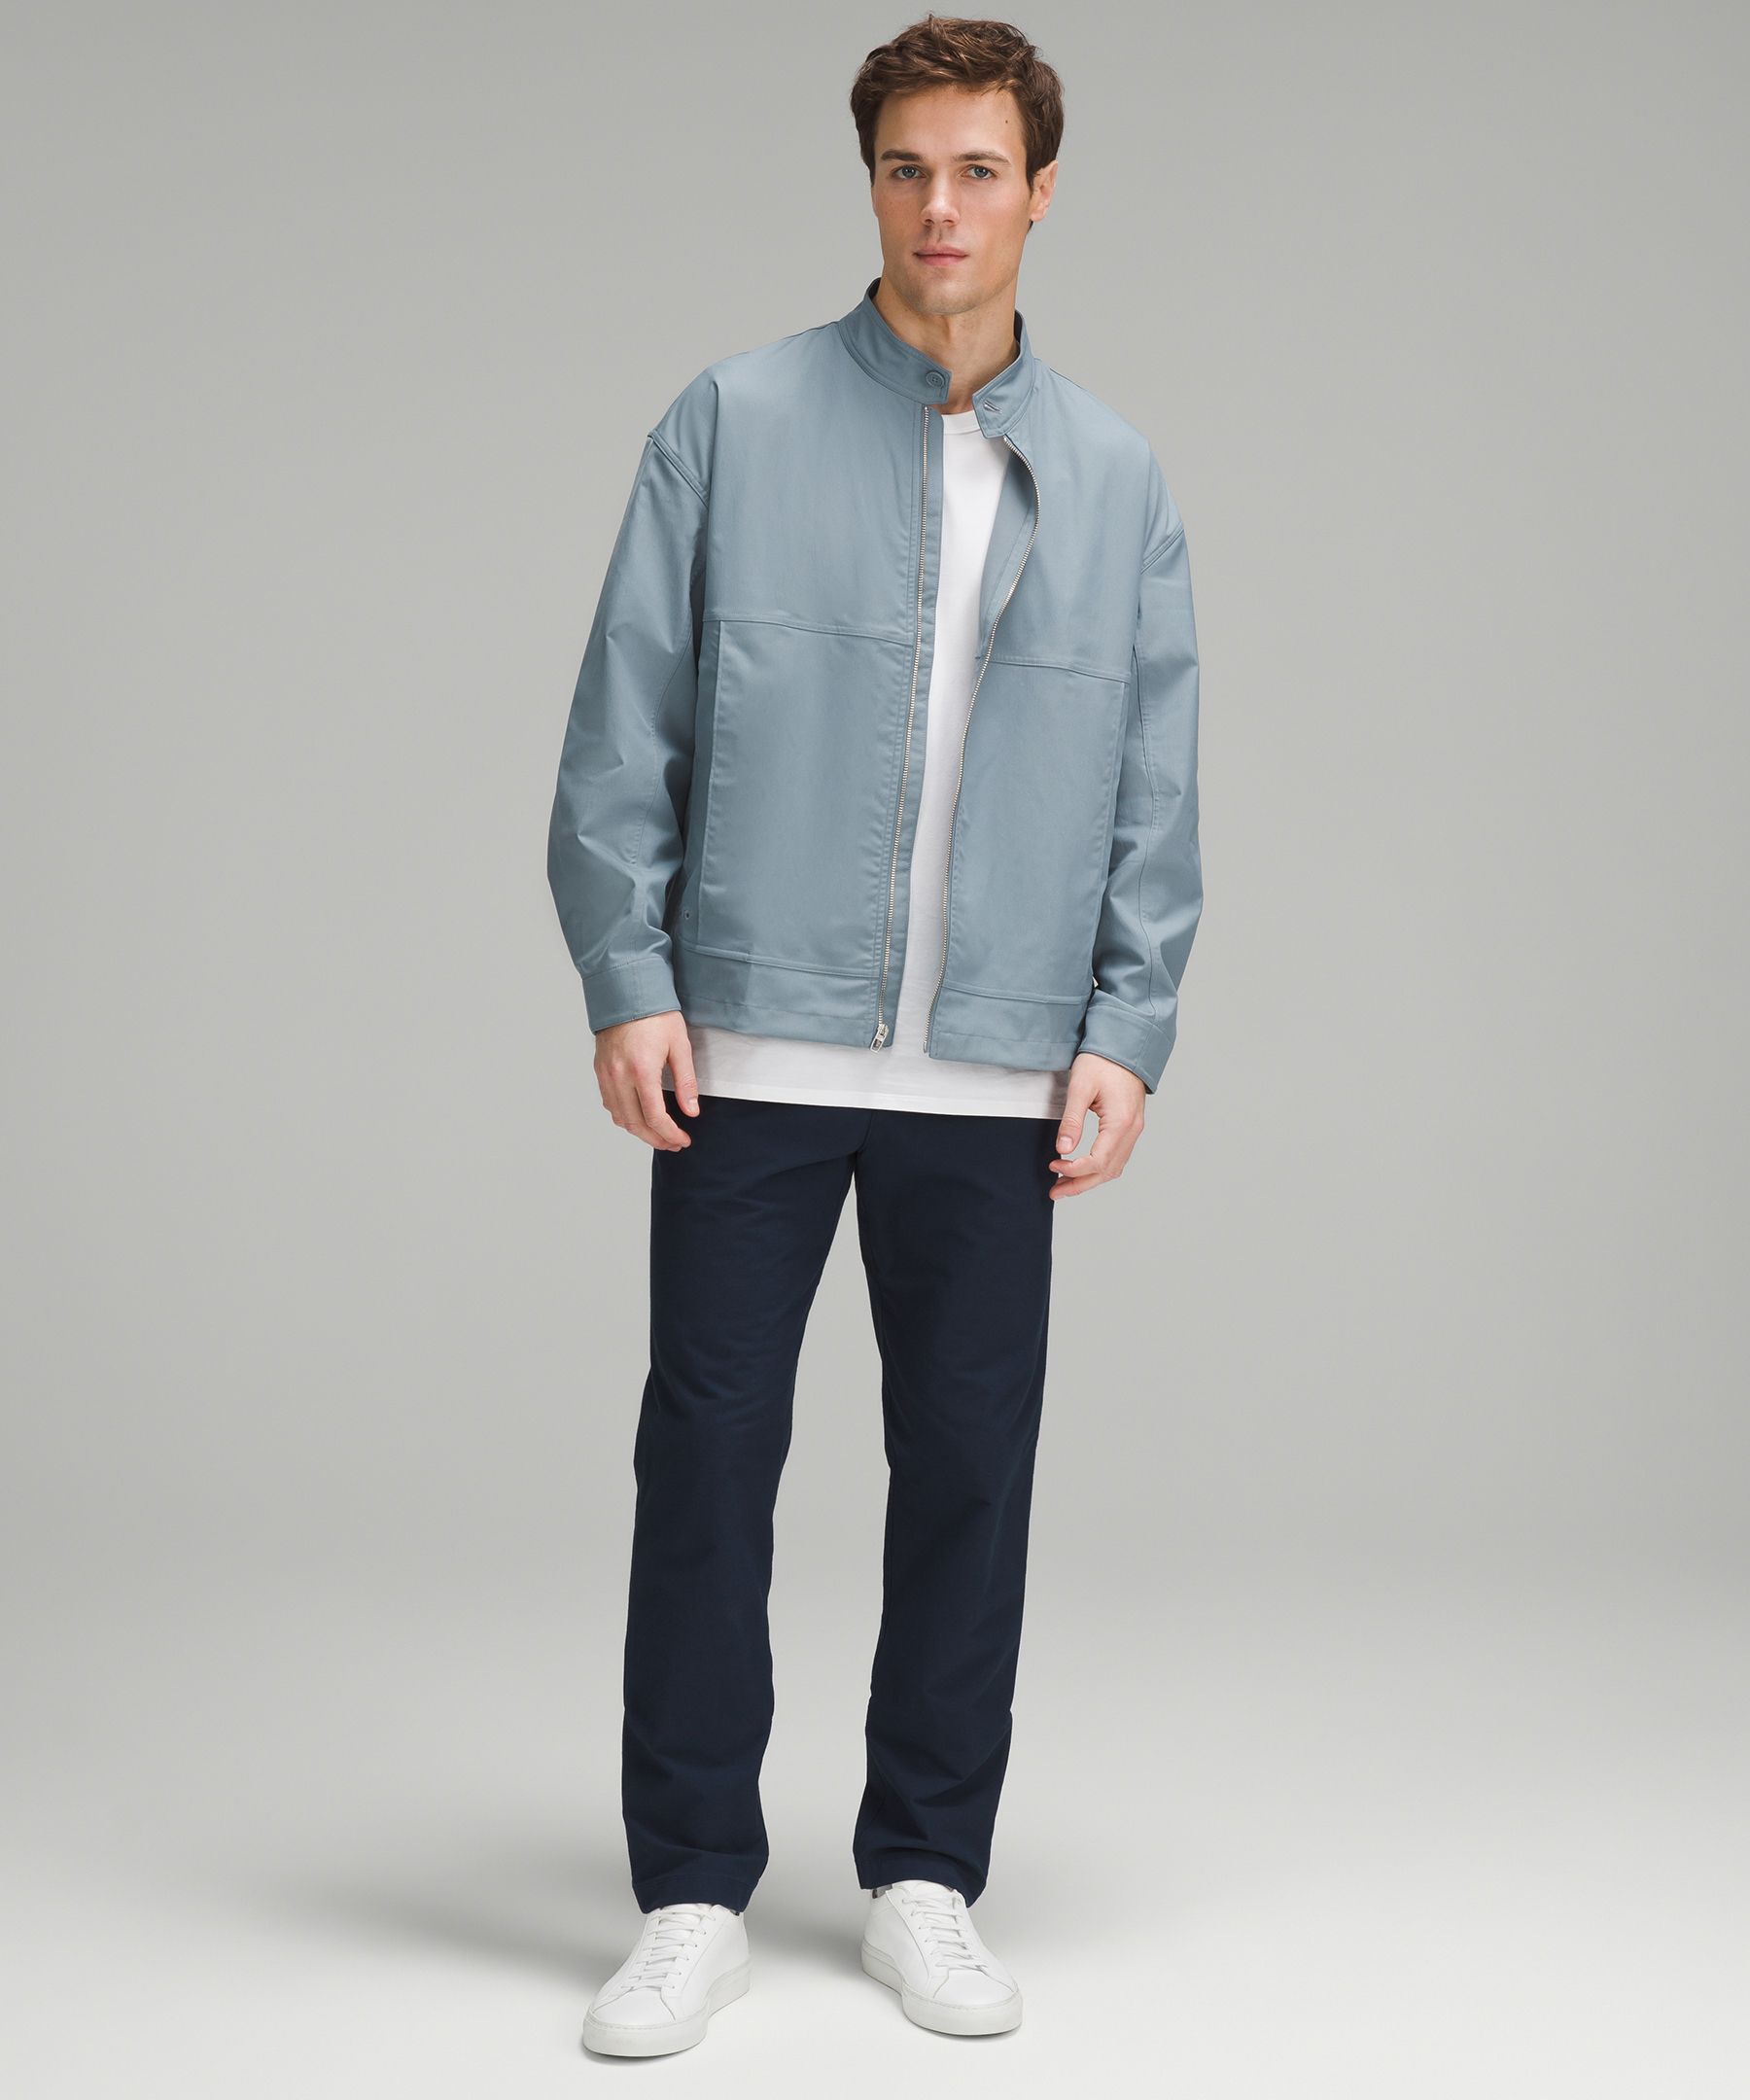 Smooth Twill Full-Zip Jacket | Men's Hoodies & Sweatshirts